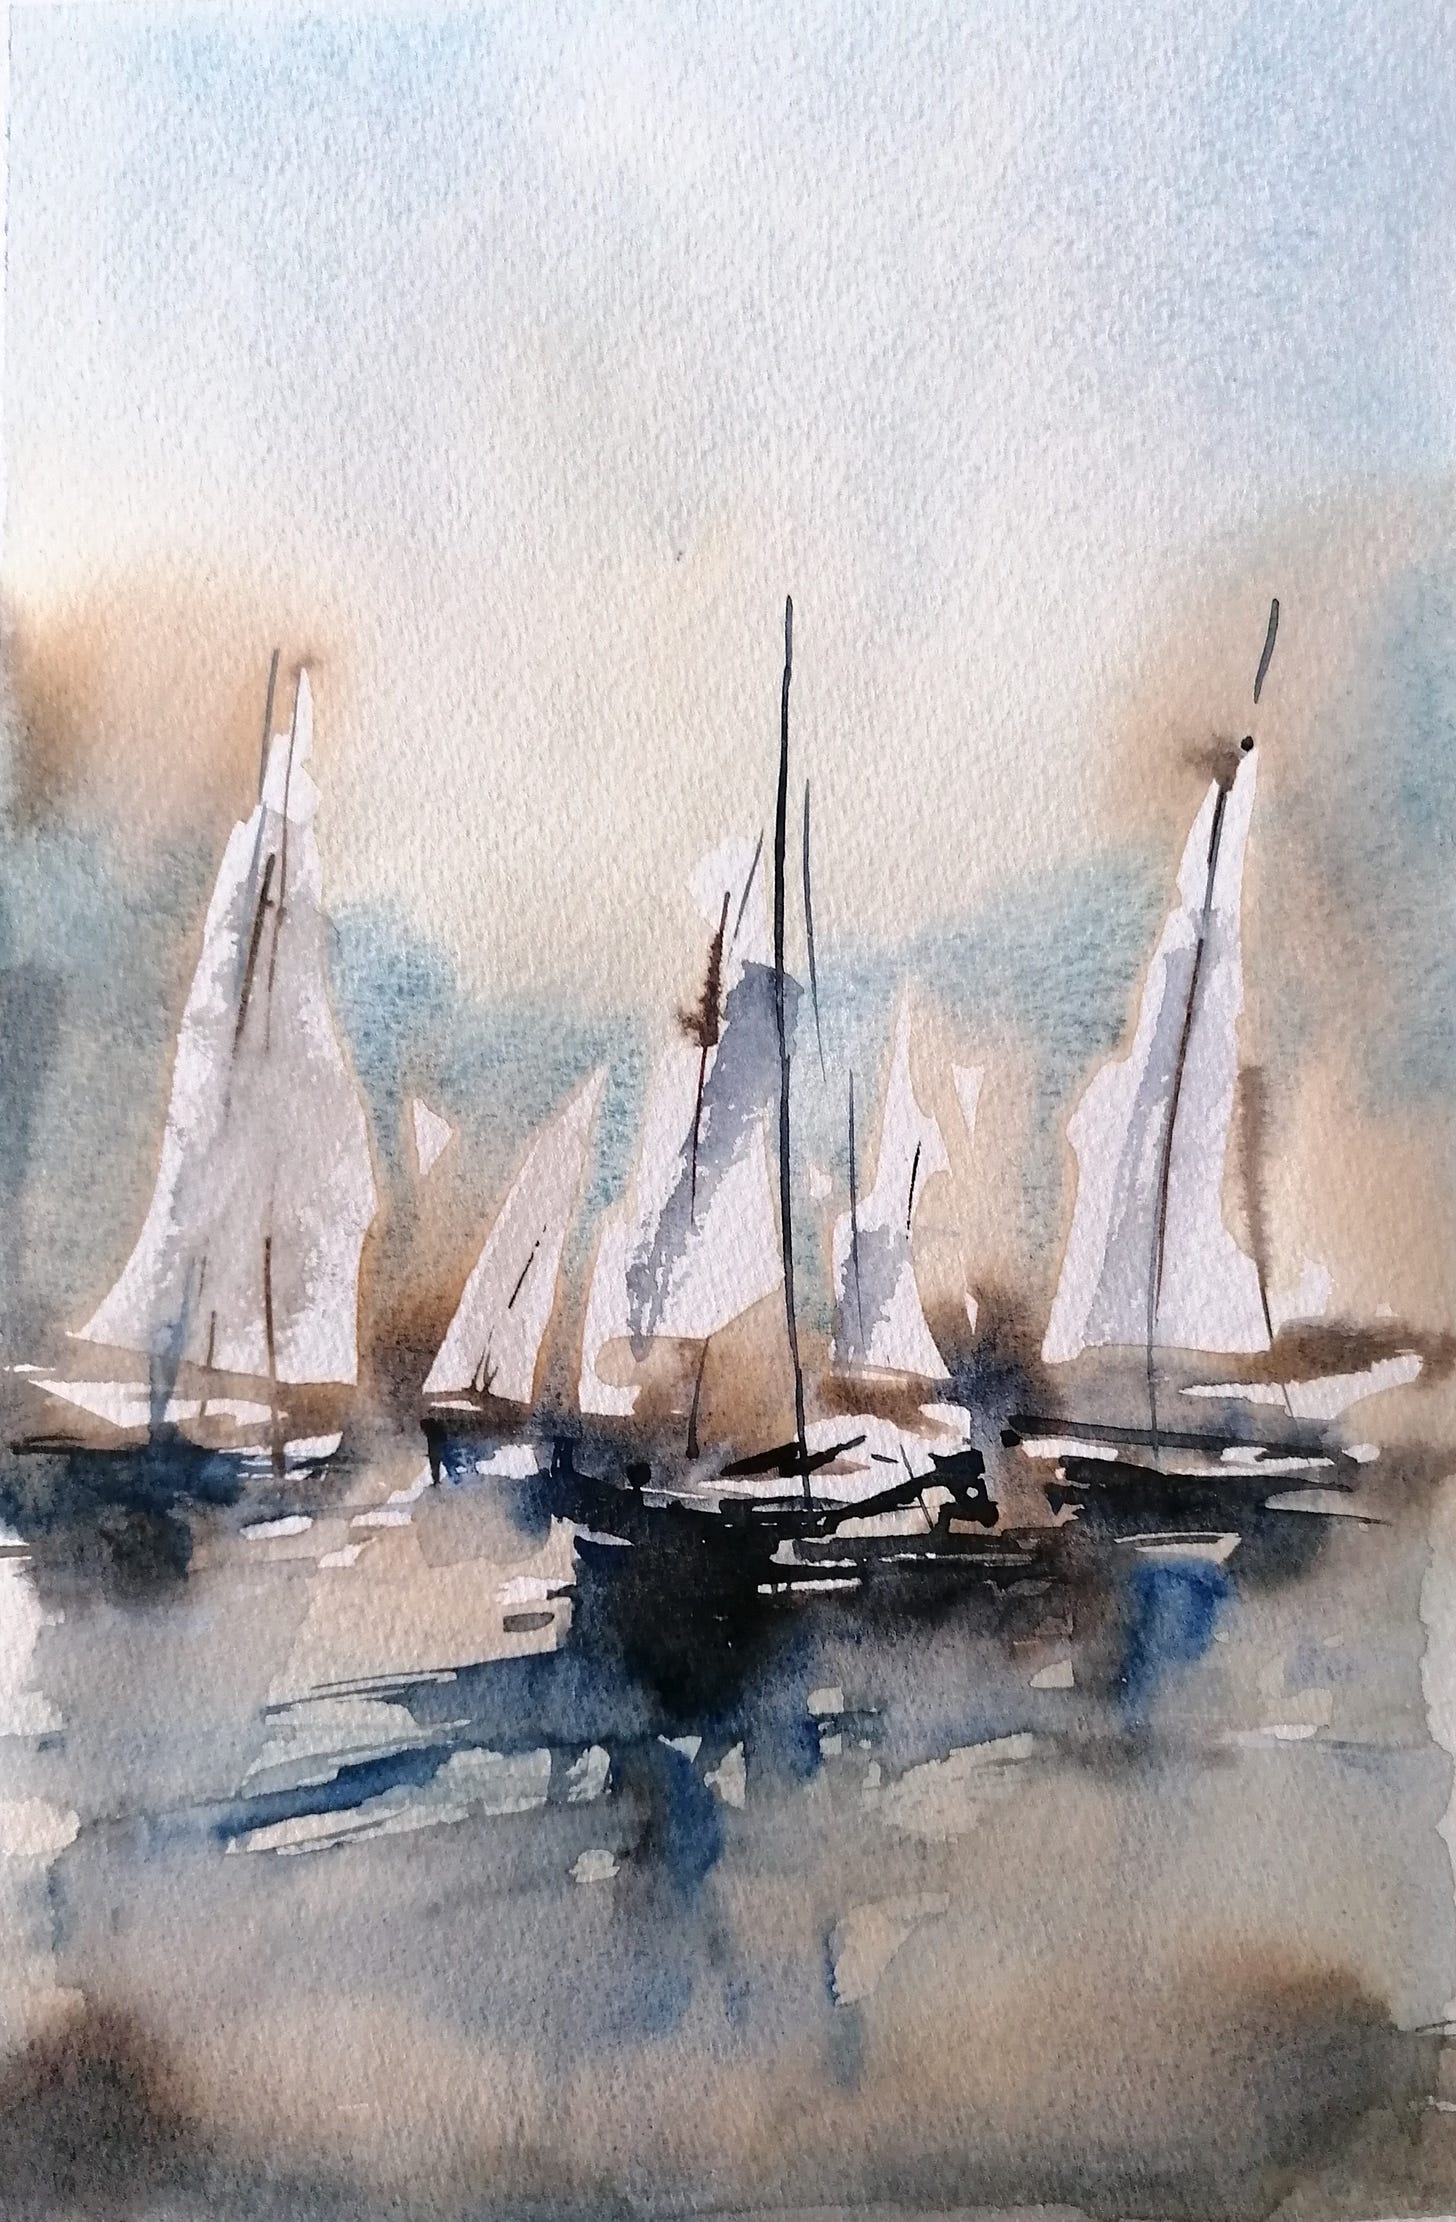 Yachts racing, white sails, sea